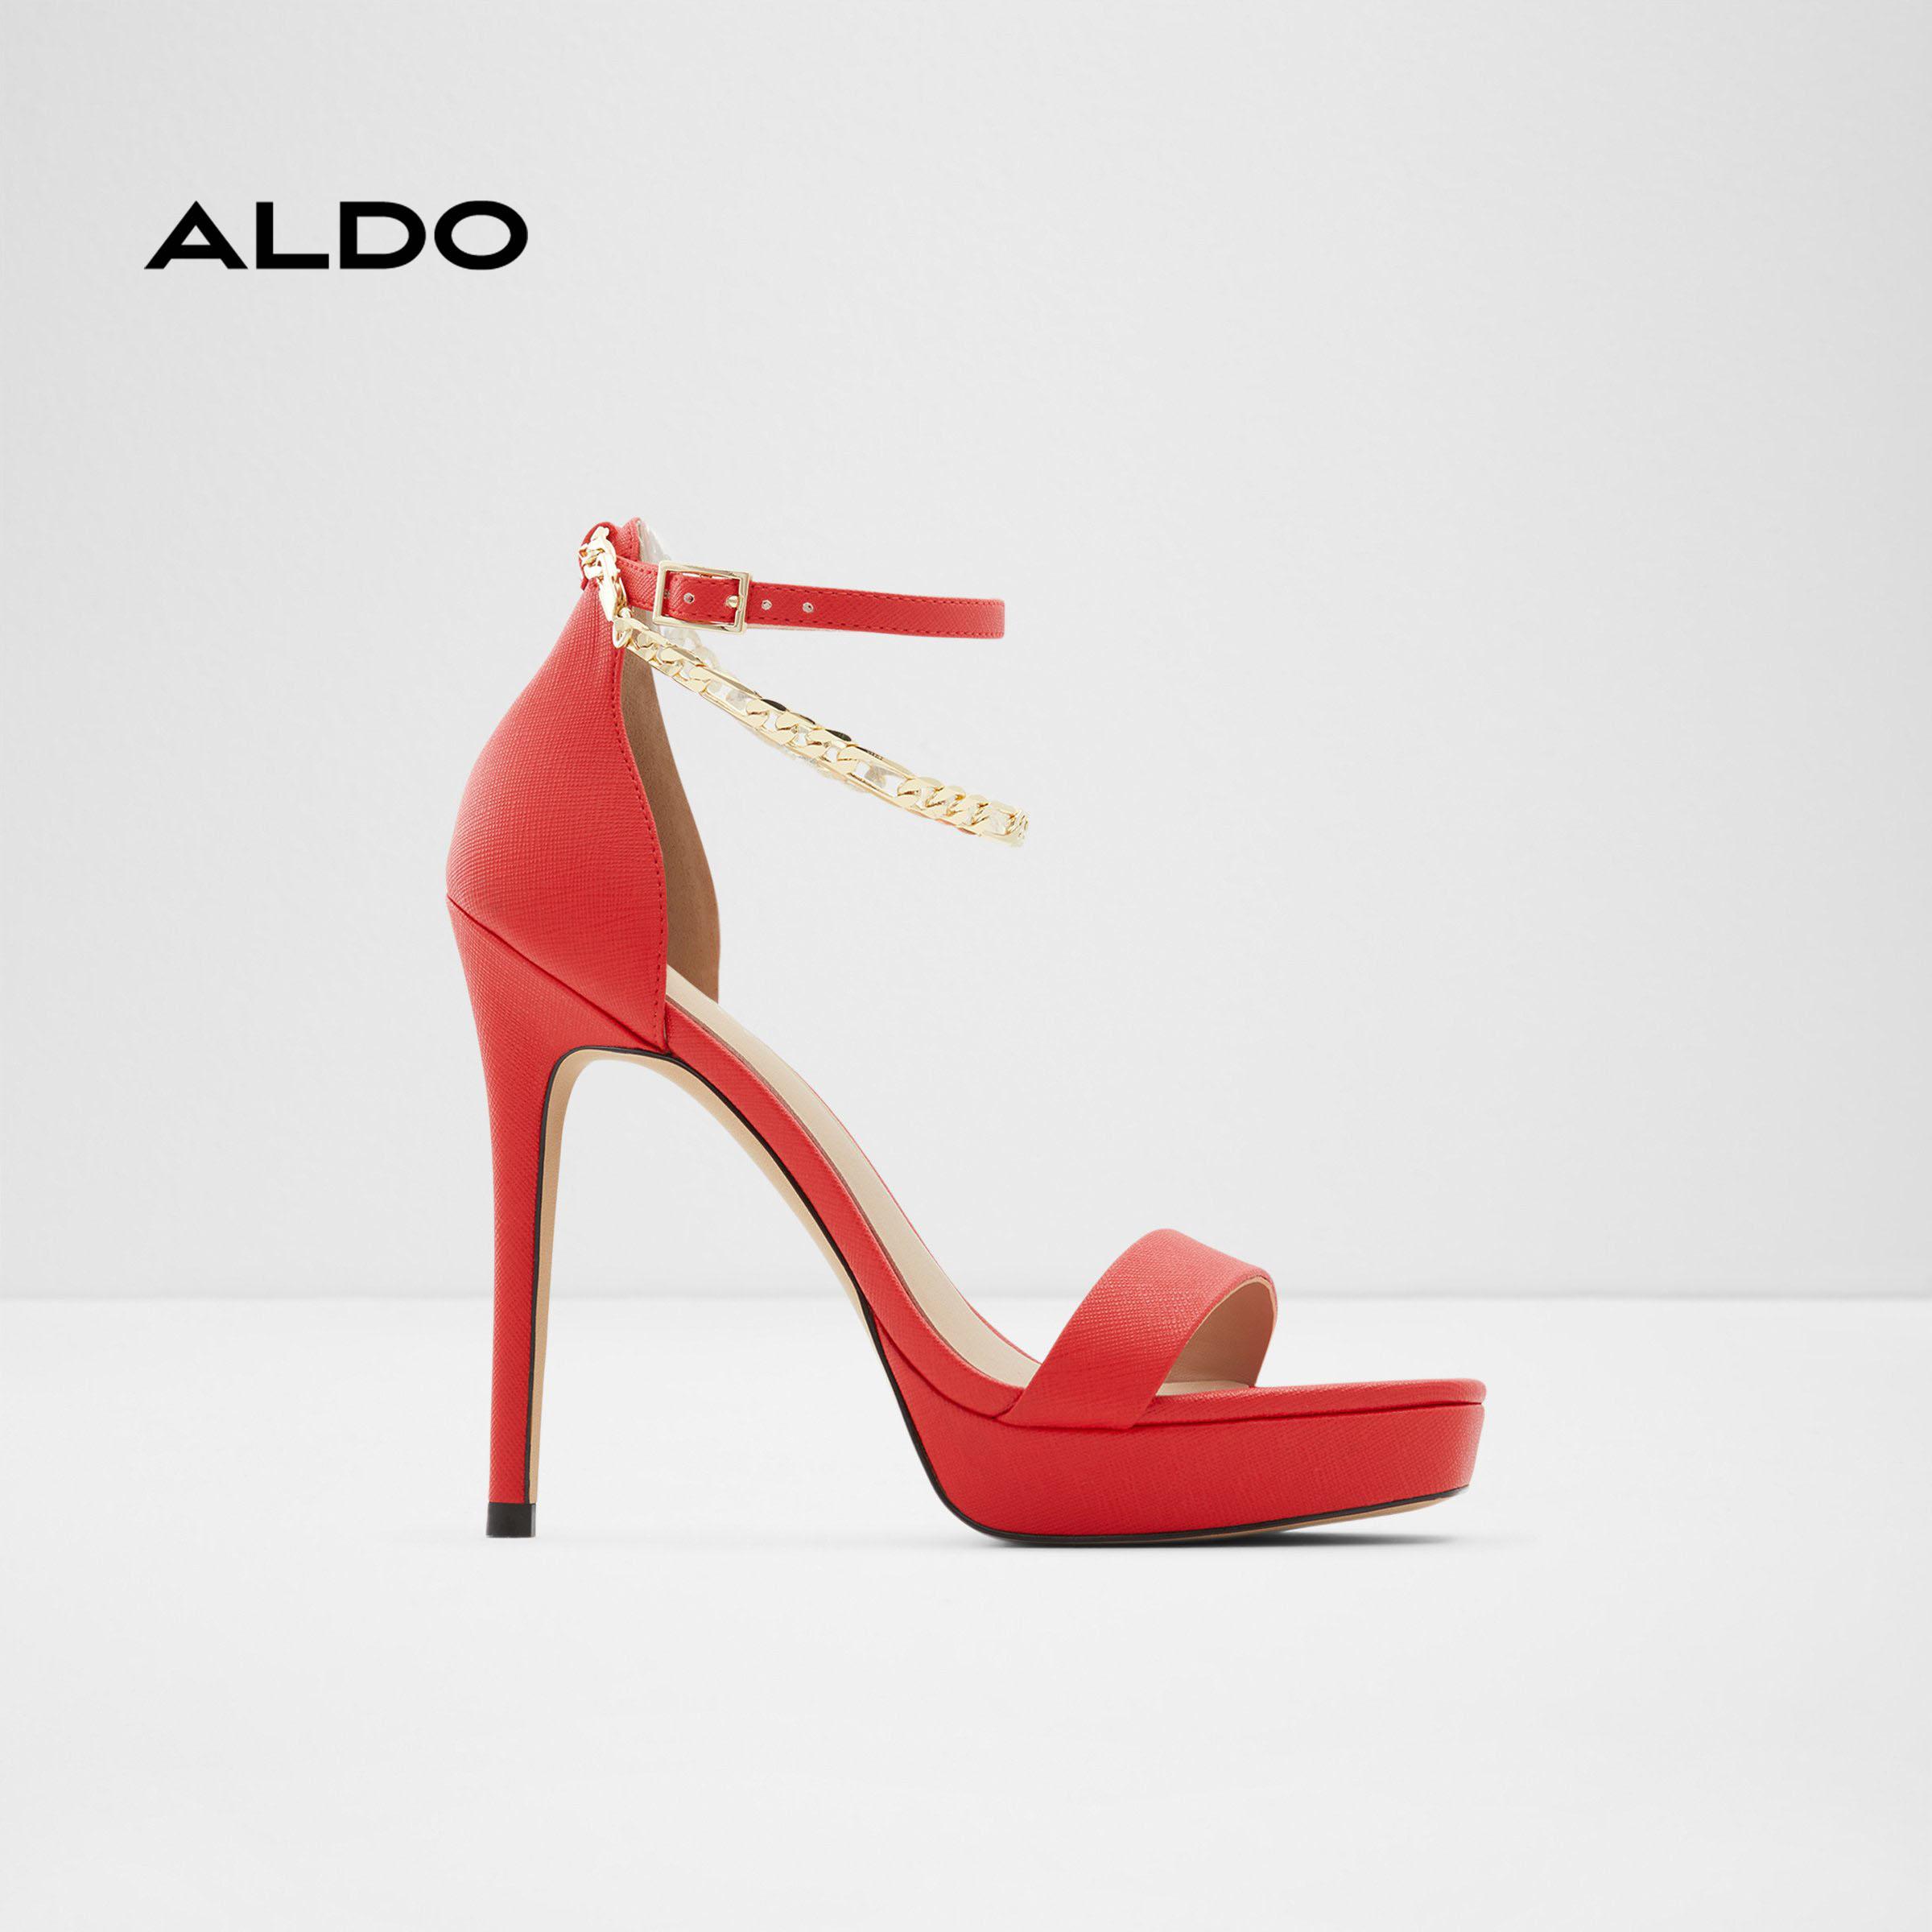 Sandal cao gót nữ Aldo SCARLETTCHAIN